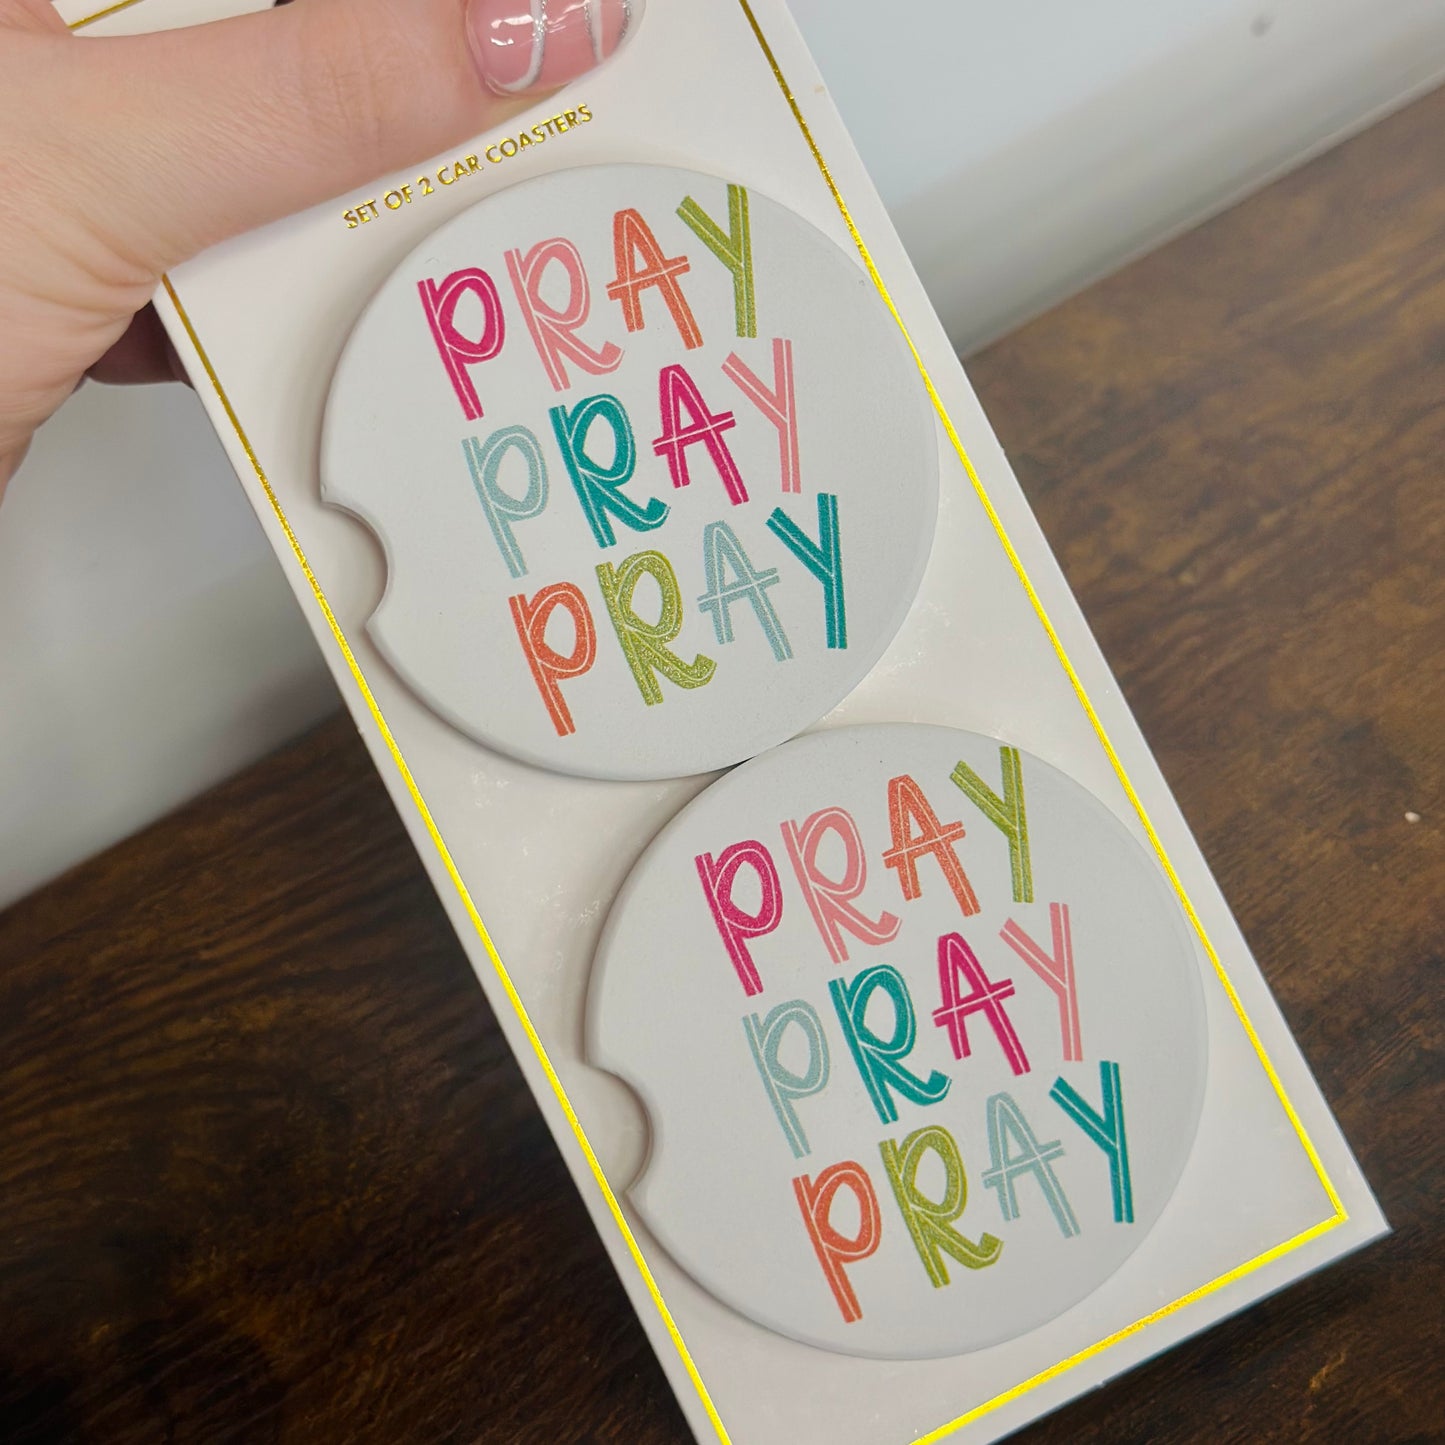 Pray Pray Pray Ceramic Car Coasters